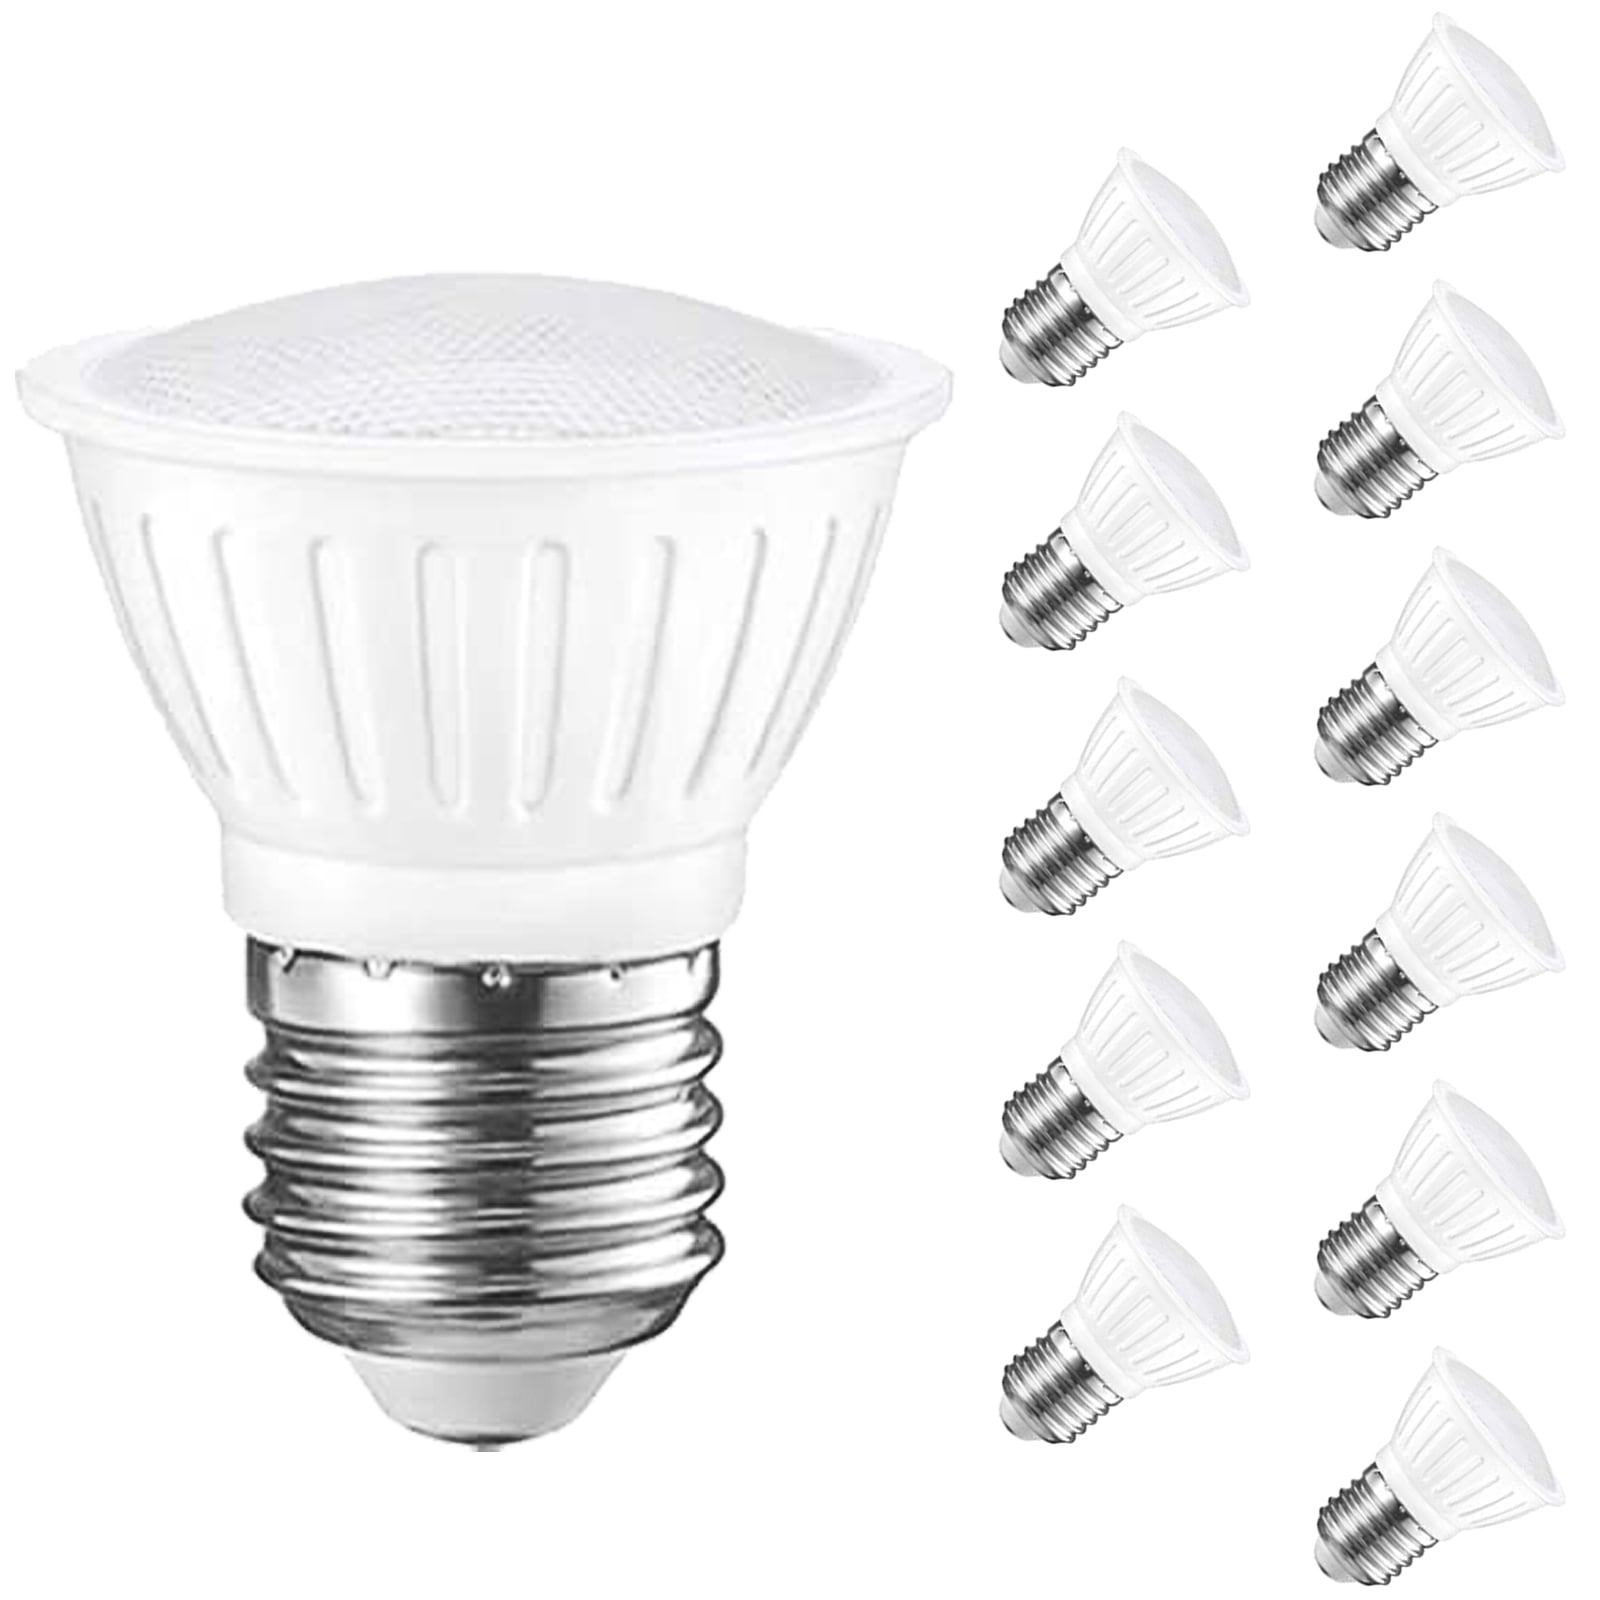 Sunlite 81013-SU LED AR111 Light Bulb Spotlight Warm White 24 Degree 600 Lumens 